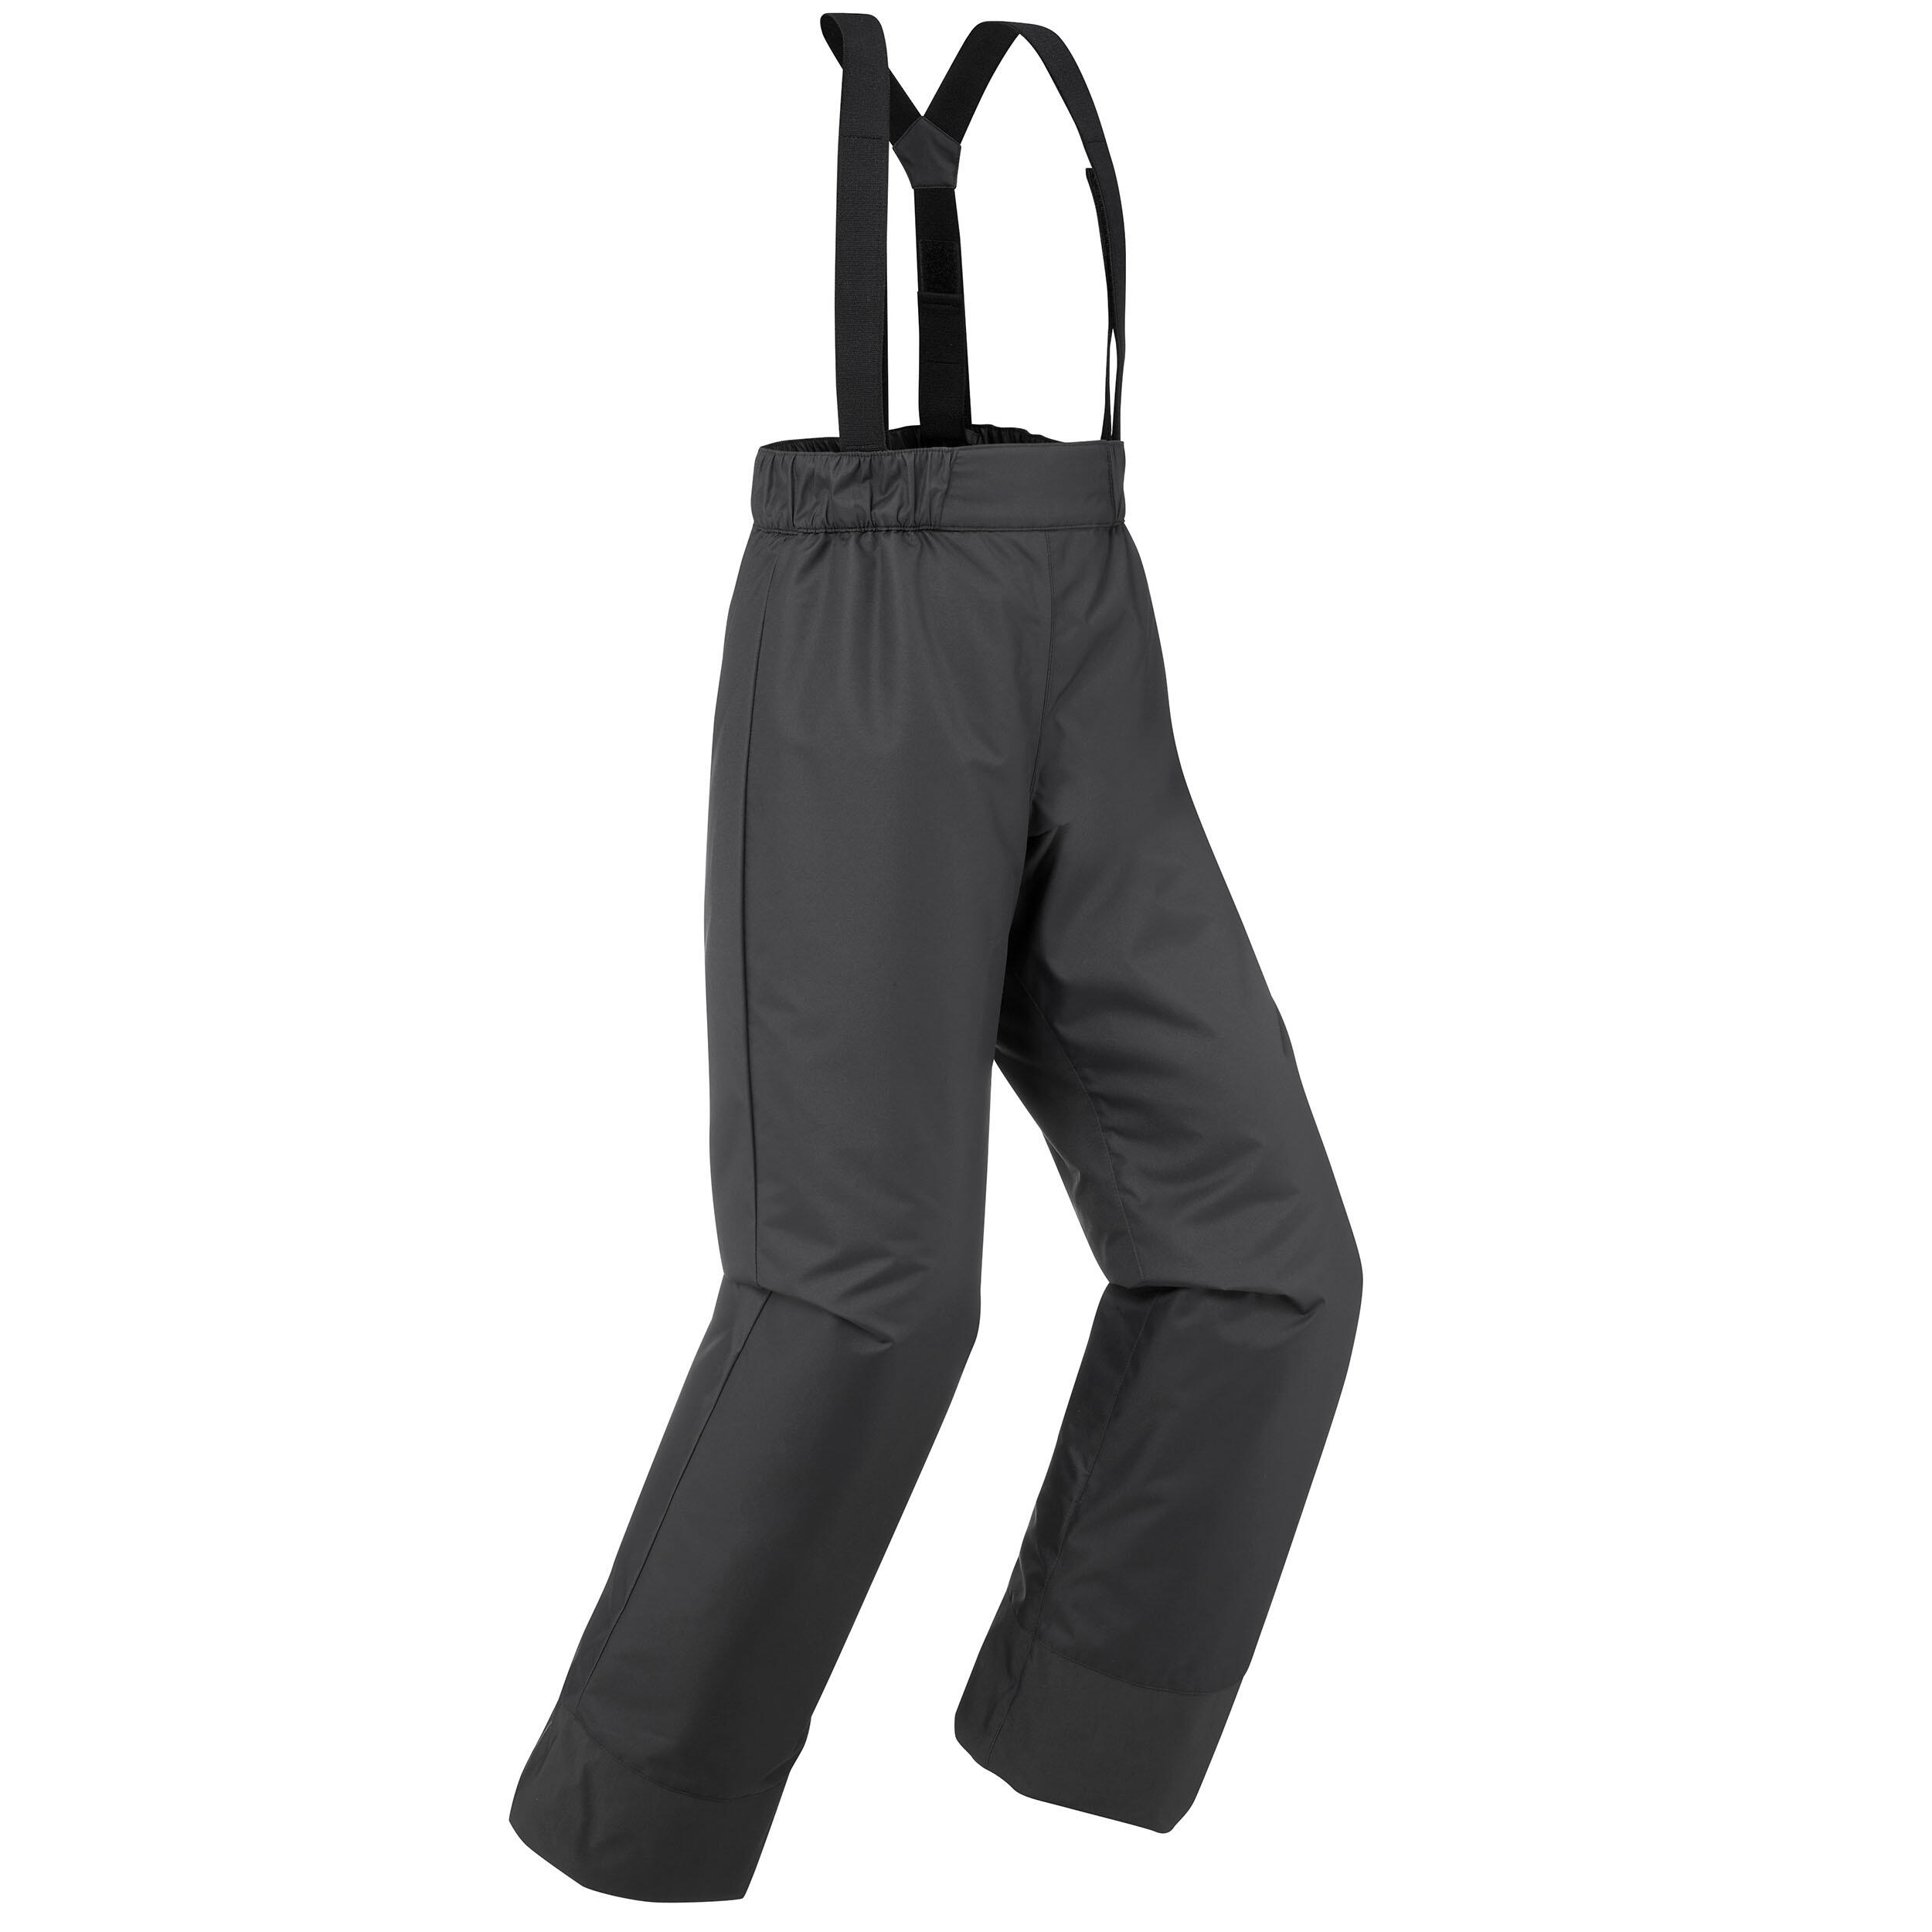 Kids' Ski Pants with Removable Straps - 100 Grey - WEDZE